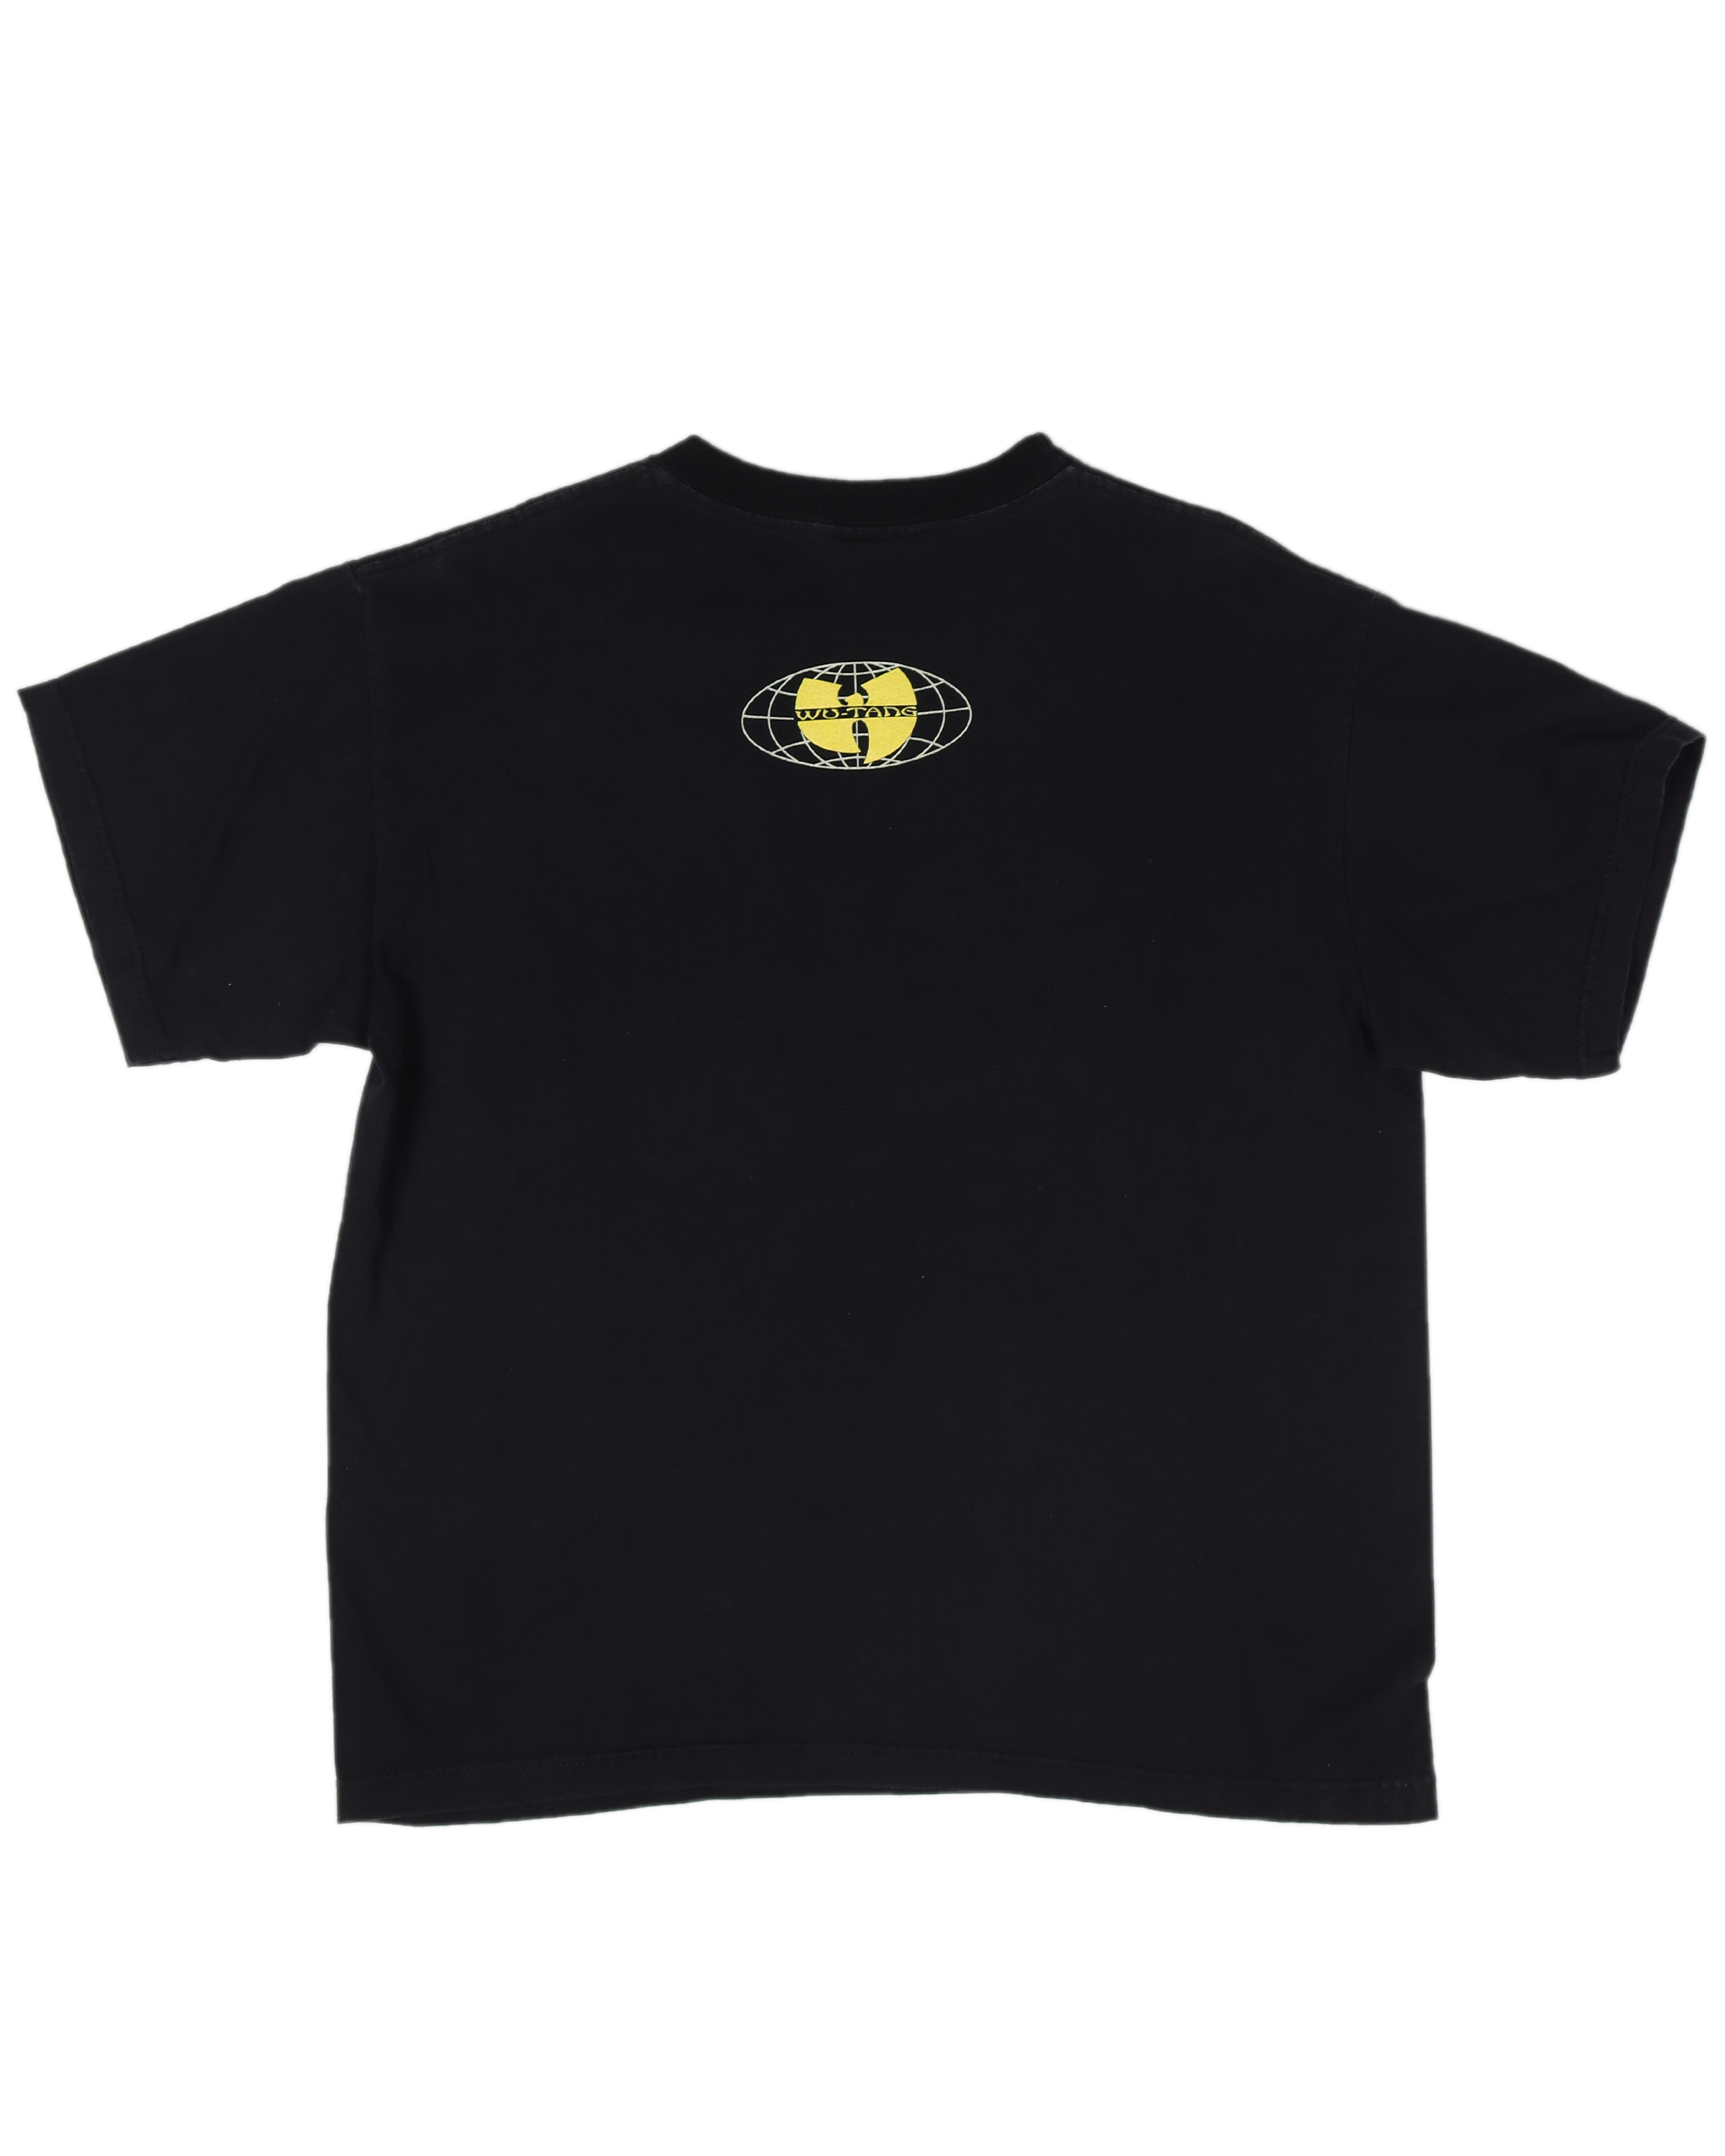 Wu-Tang Clan 'Forever' Brady Bunch 9 Pic T-Shirt